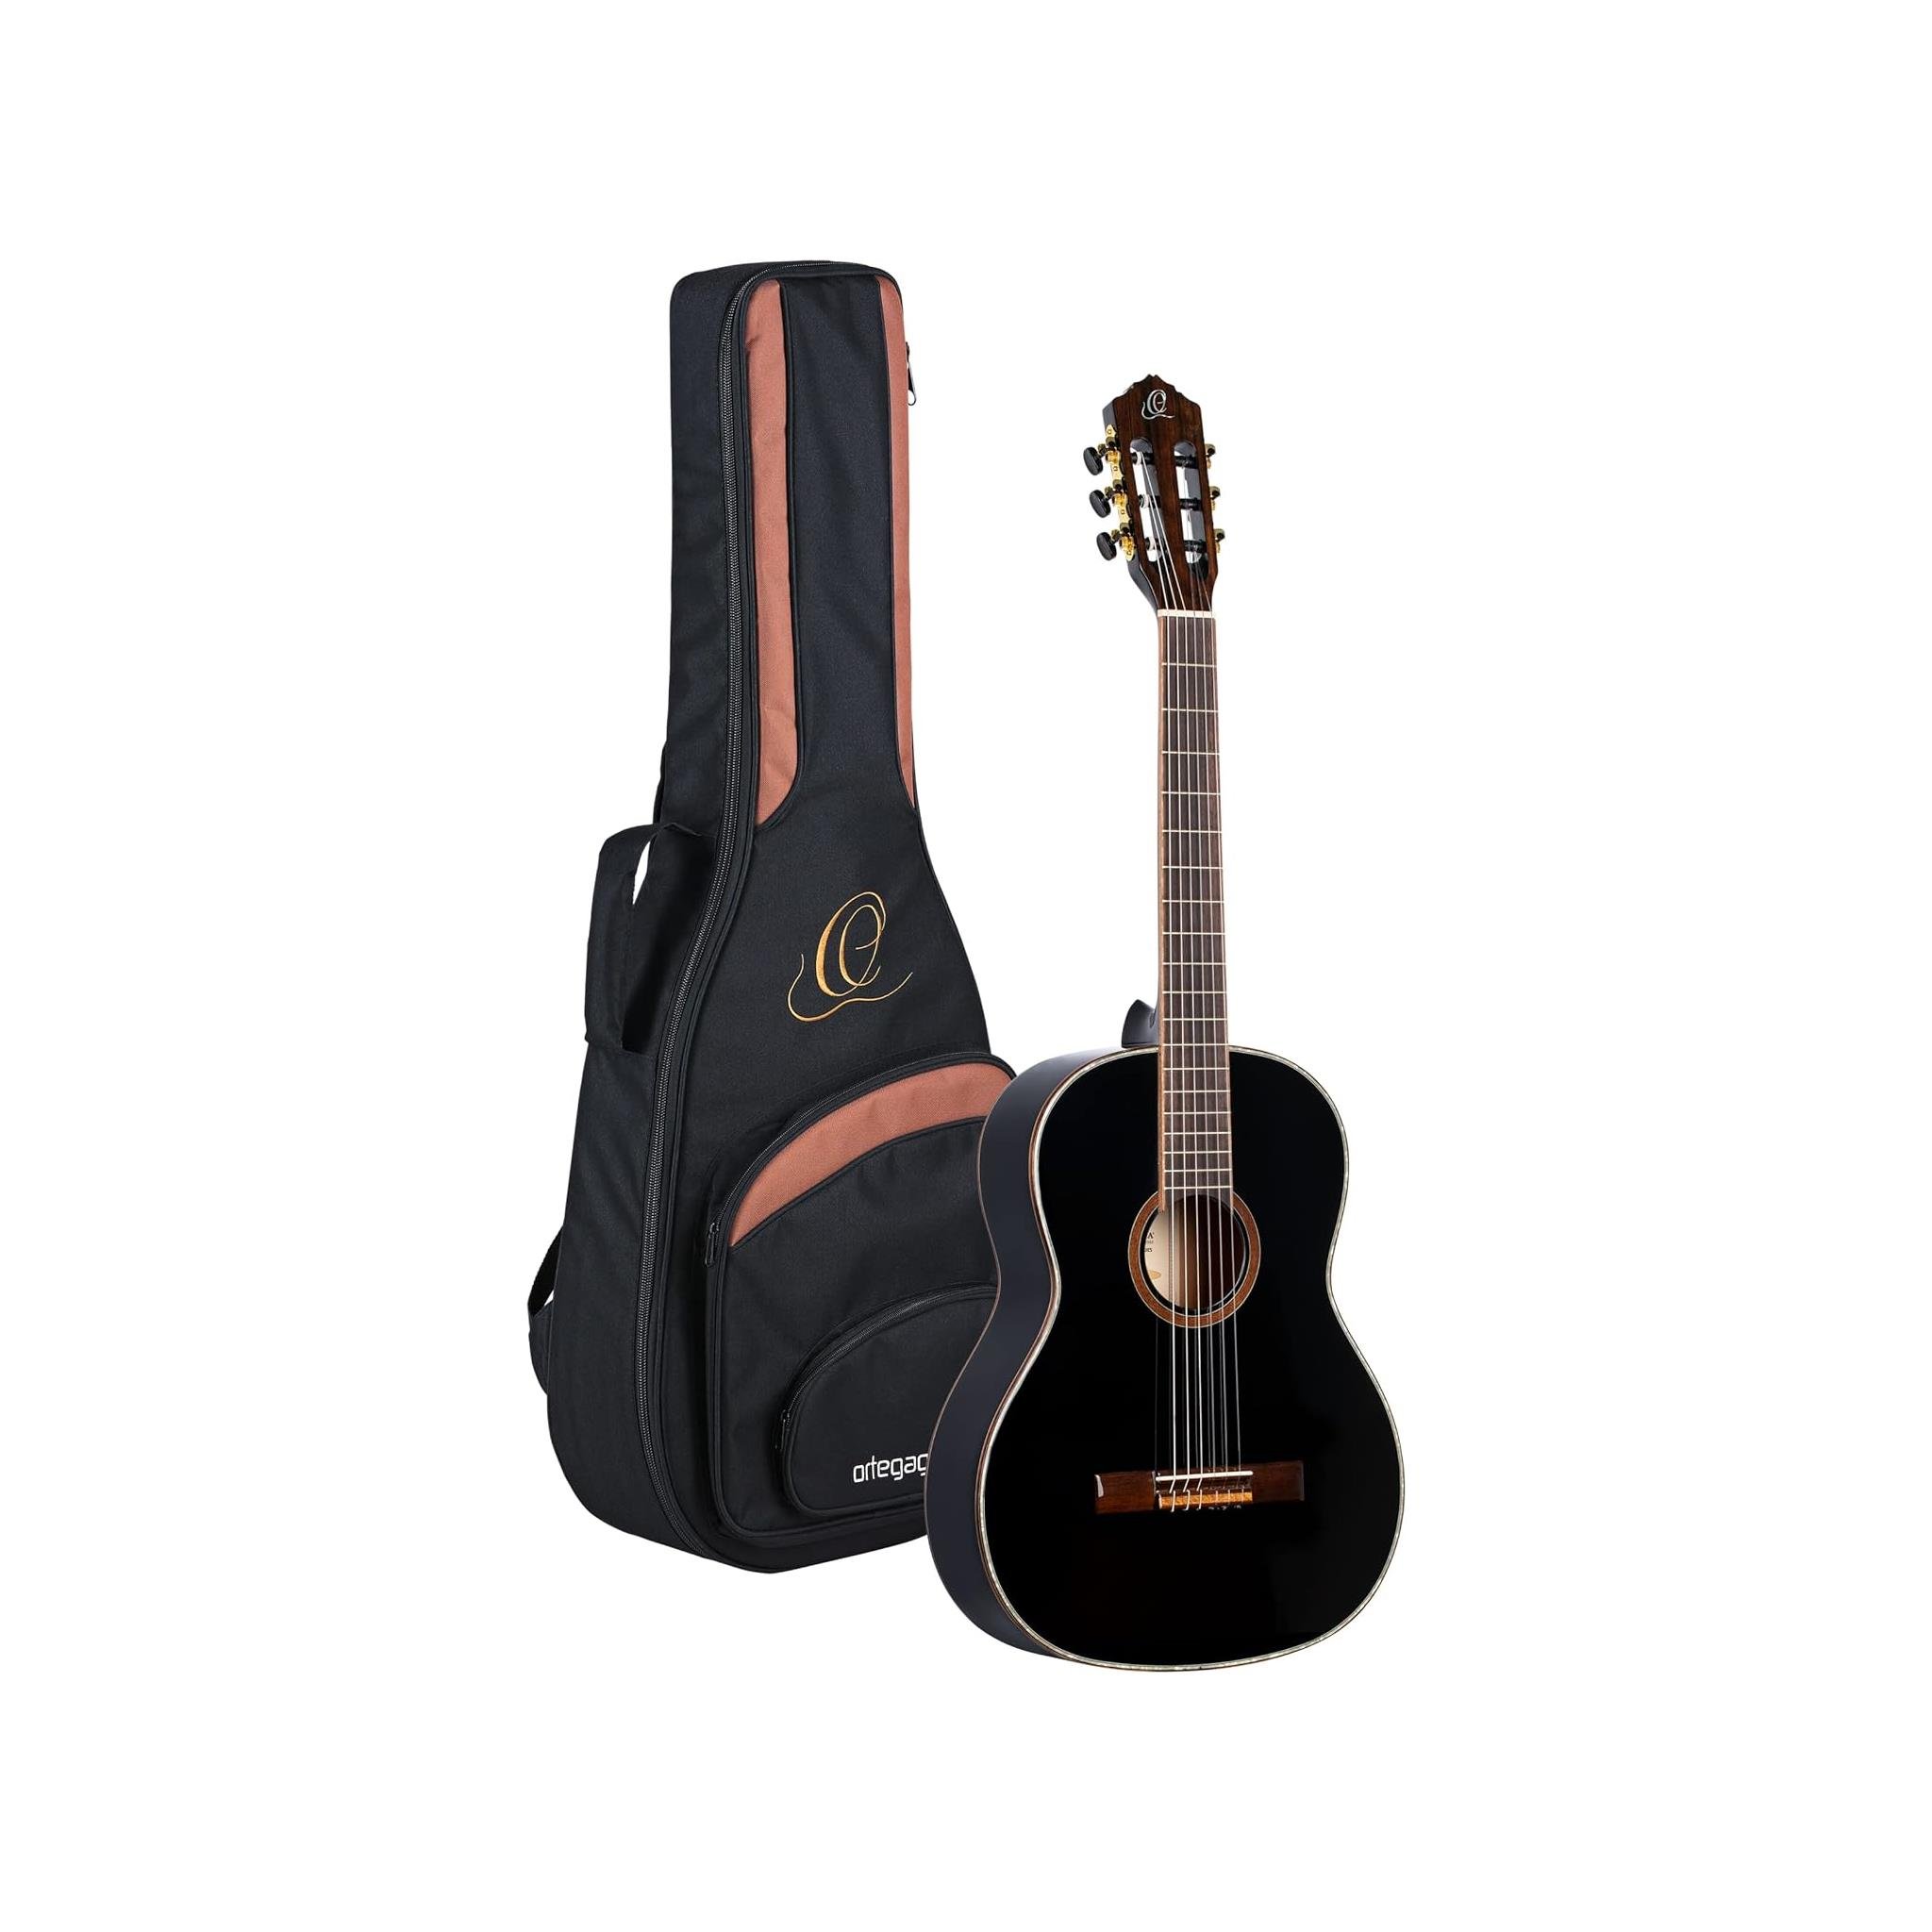 Ortega Family Series Full Size Slim Neck Nylon String Classical Guitar w/ Bag